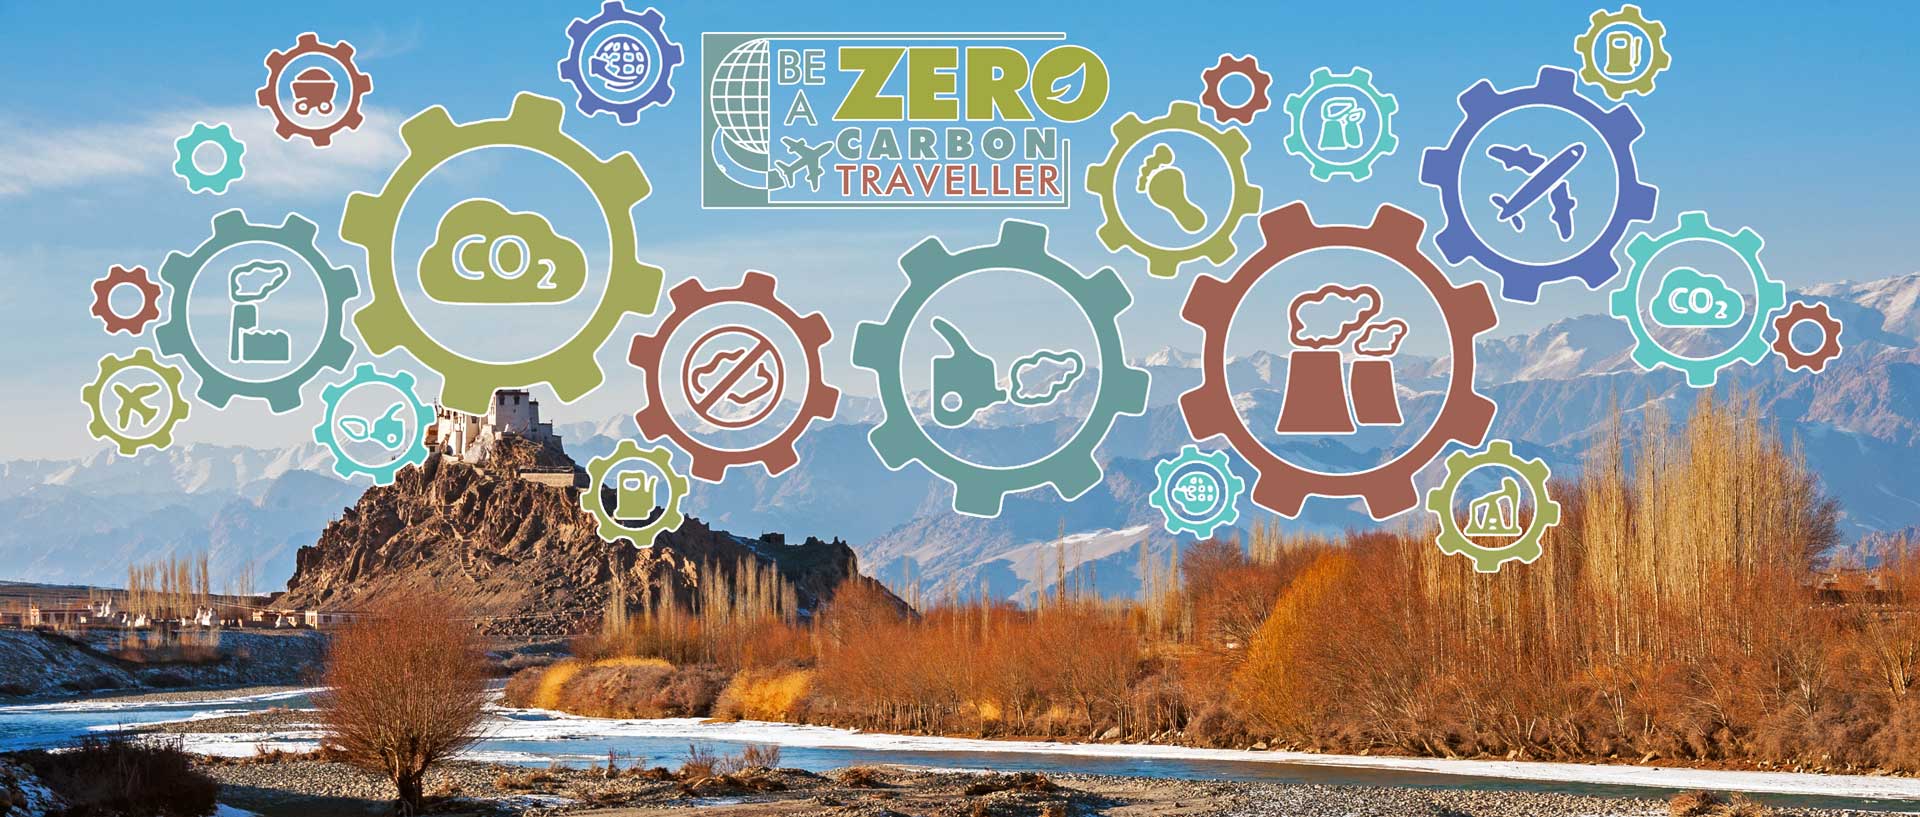 Zero carbon traveller